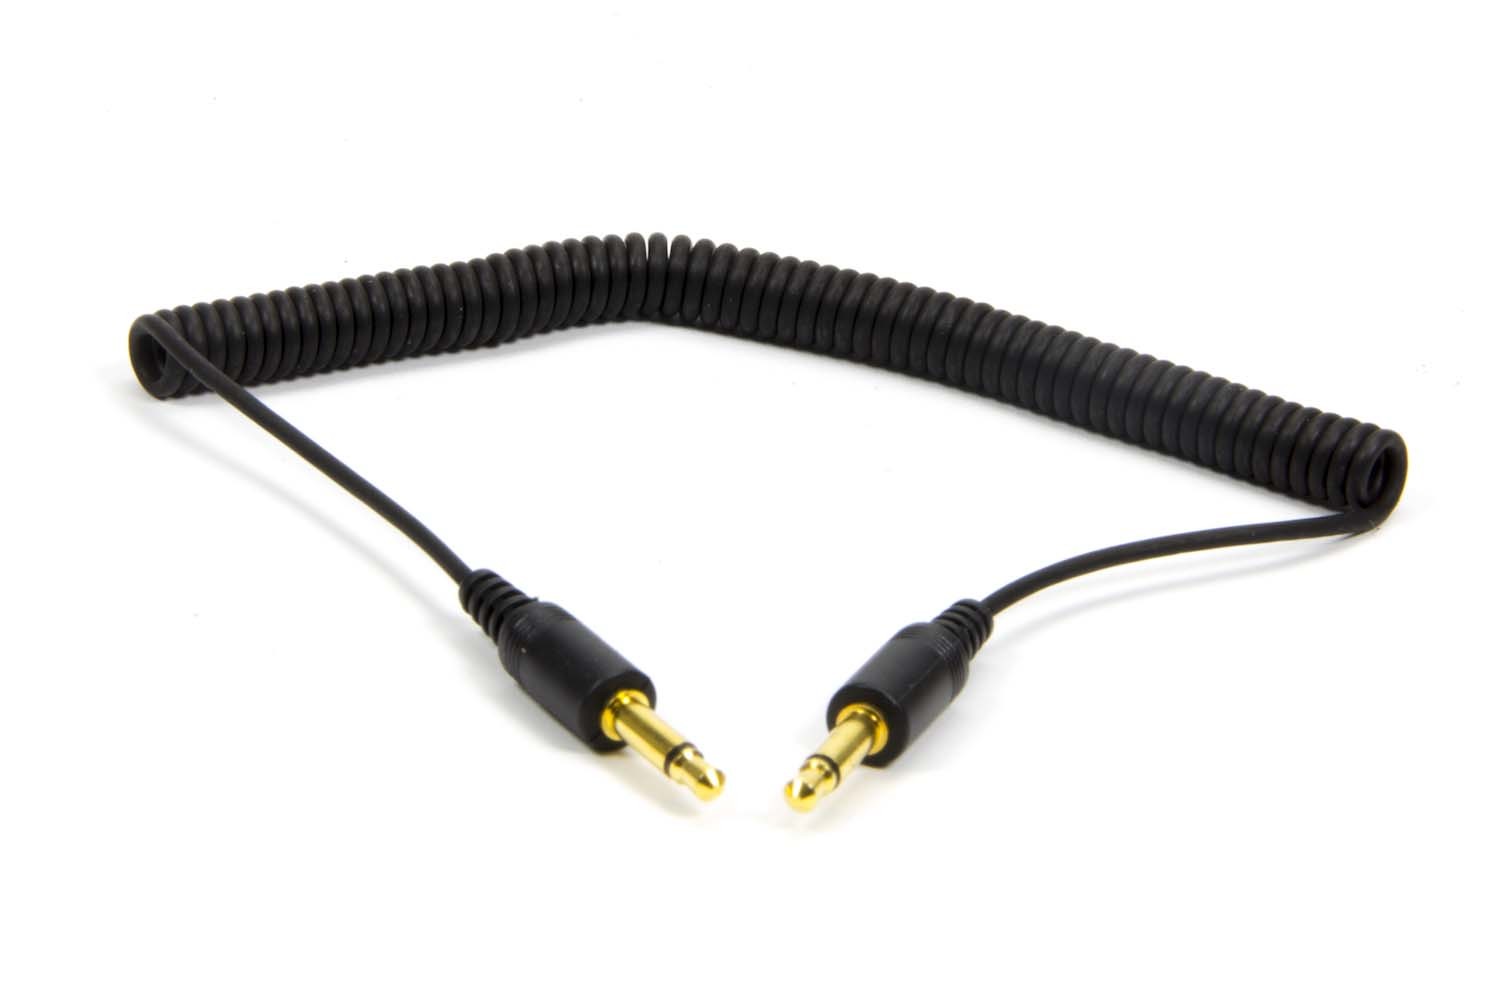 Raceceiver CC360 Headphone Axillary Cord, 14 in Length, Coiled, Black, Each